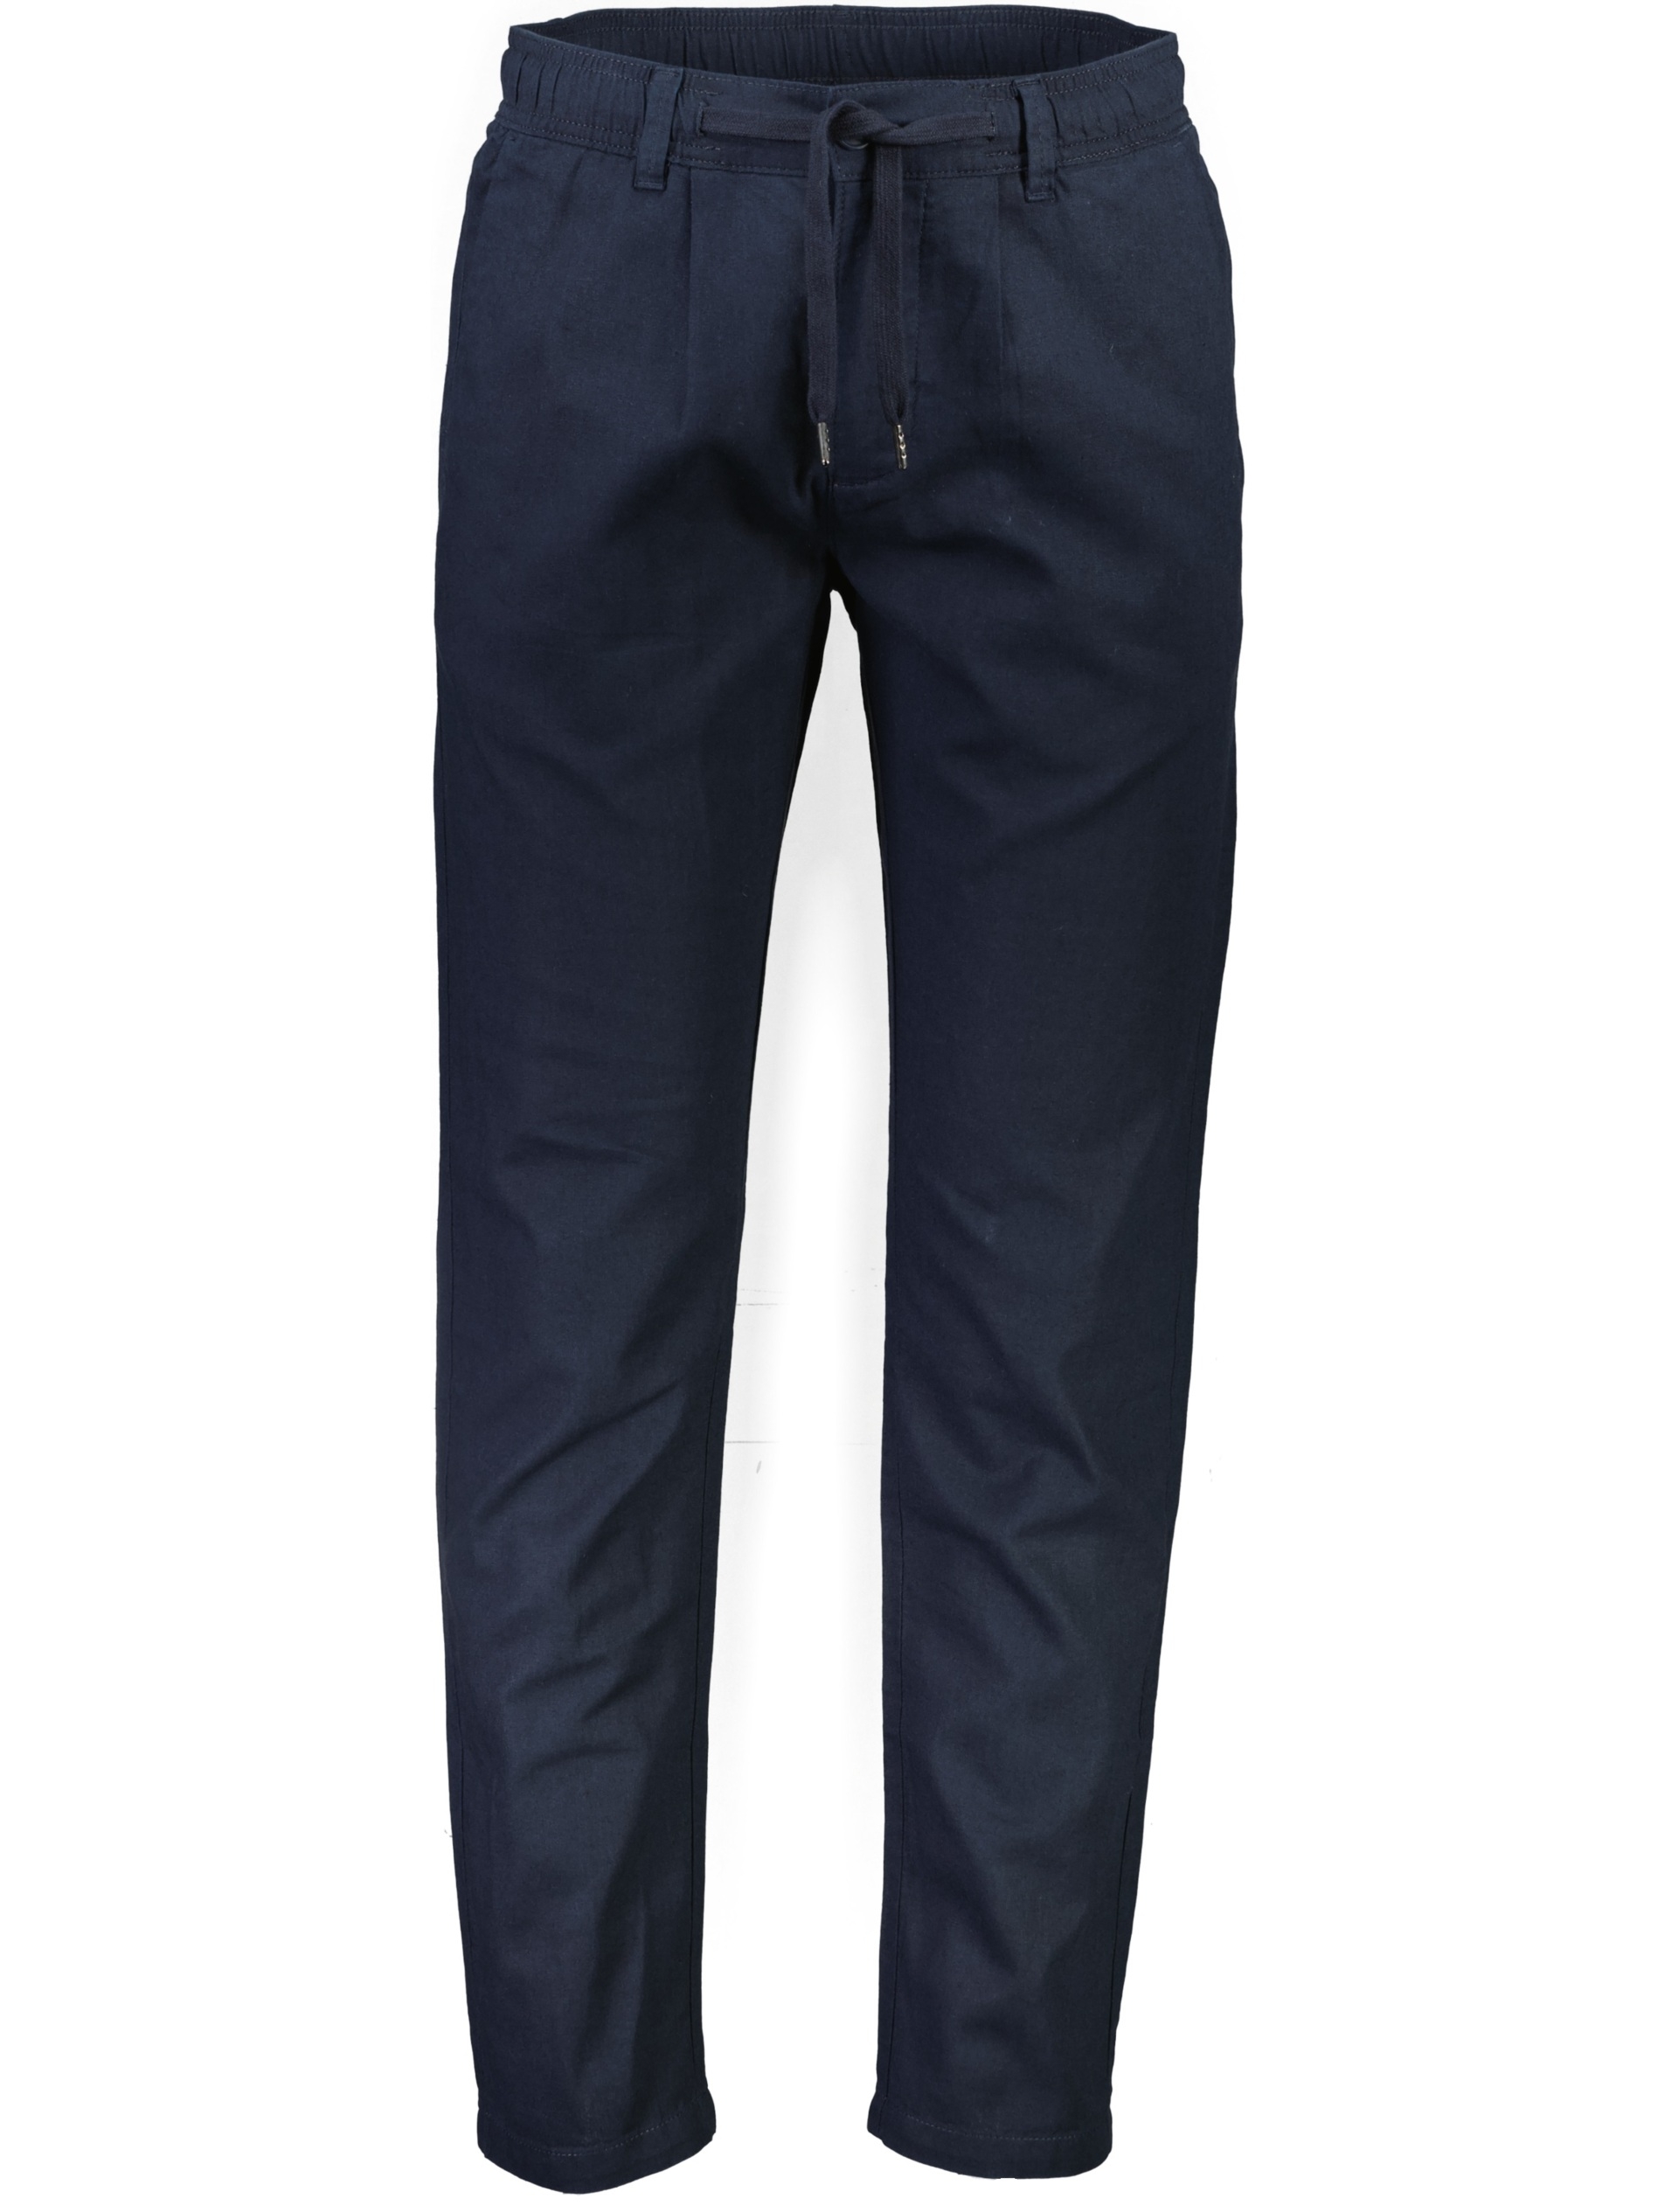 Lindbergh Linen pants blue / navy